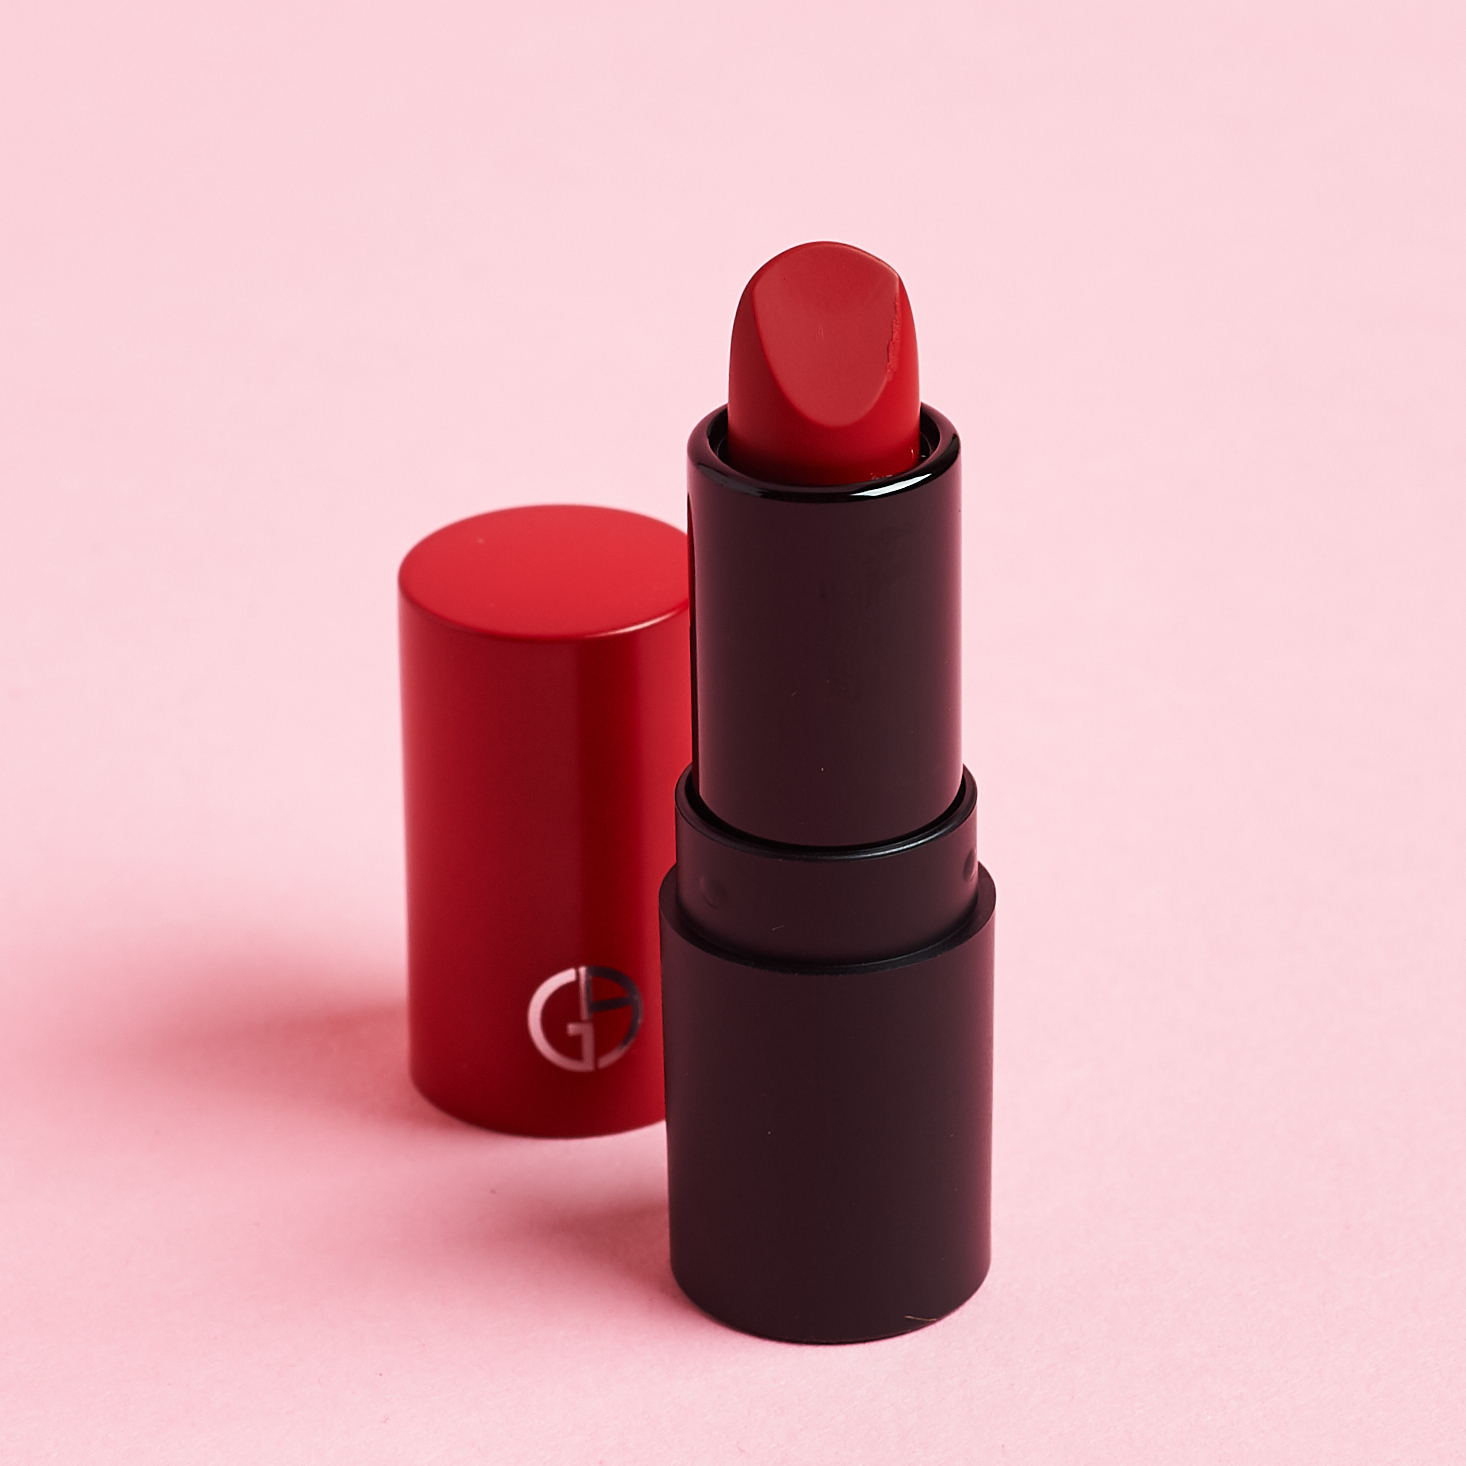 Giorgio Armani Beauty Rouge D’ Armani matte lipstick with lid off